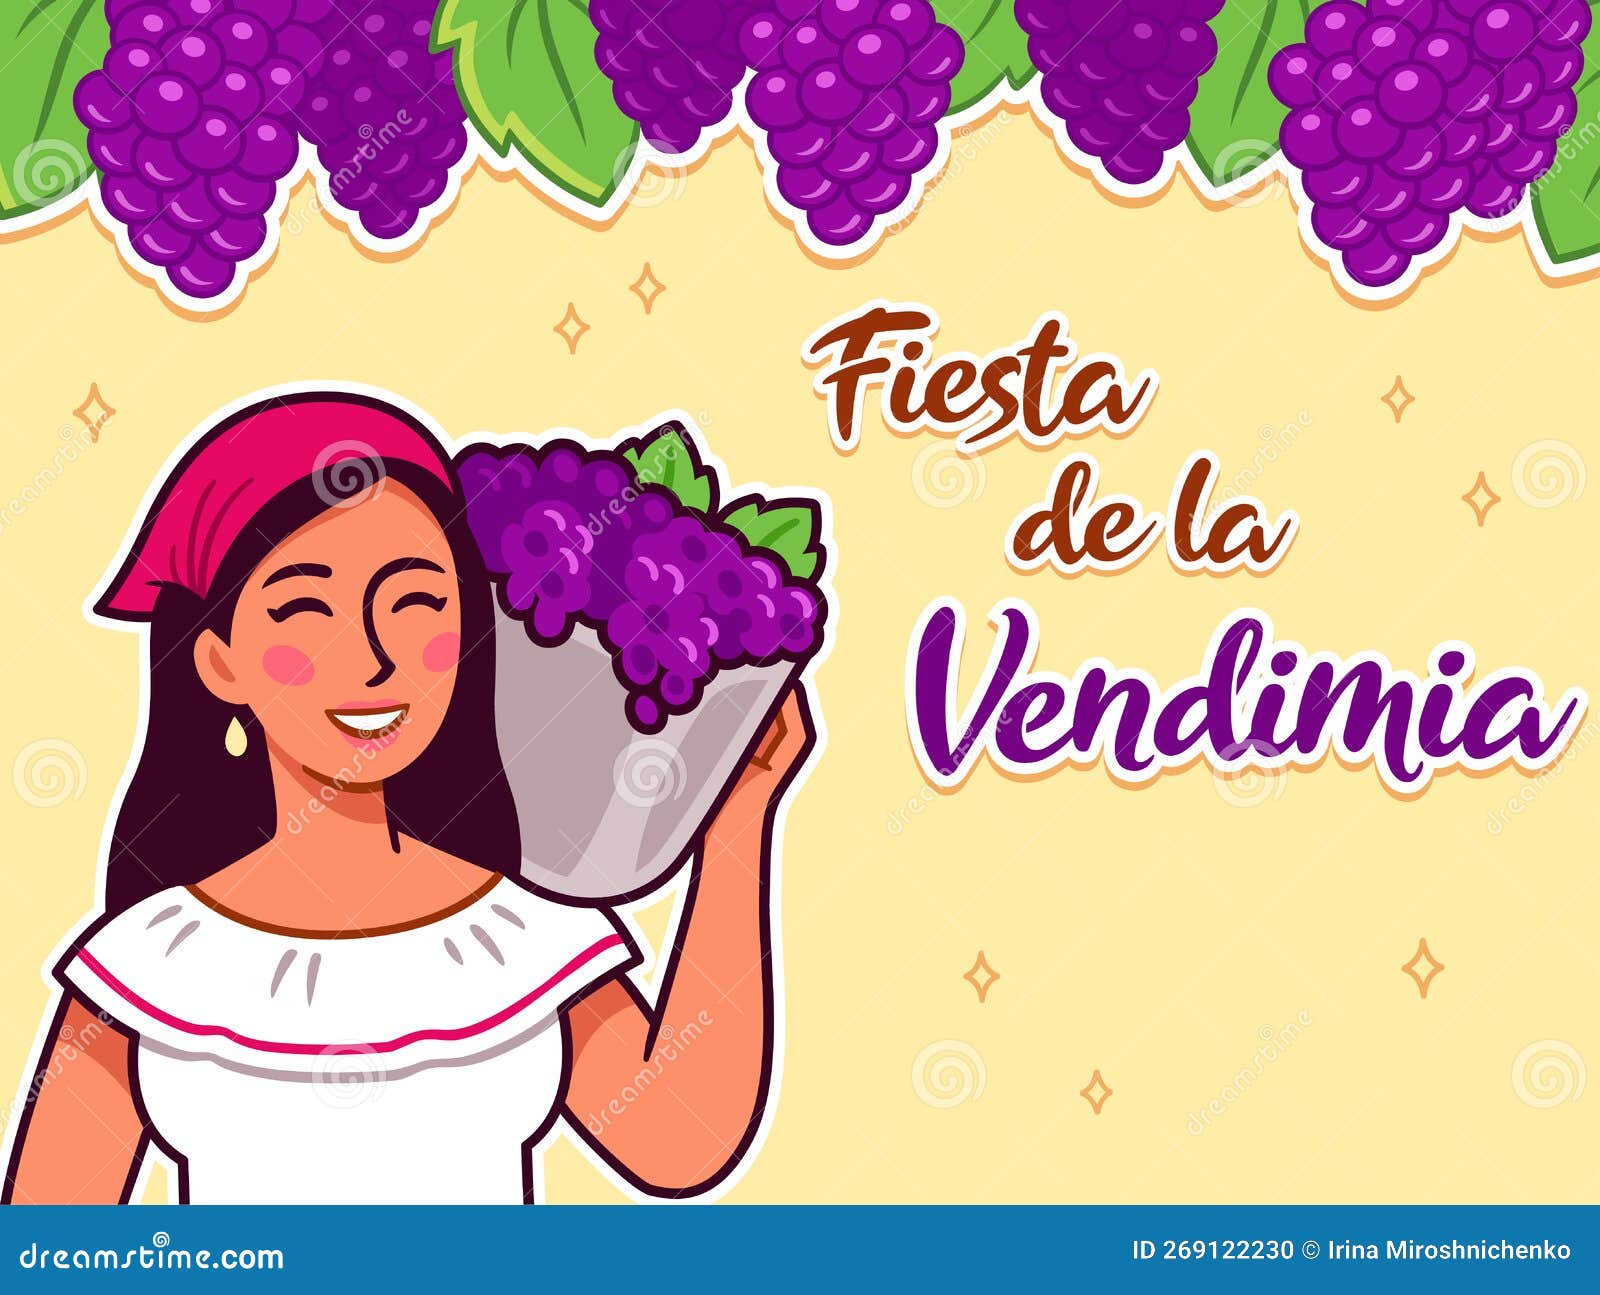 fiesta de la vendimia grape harvest festival